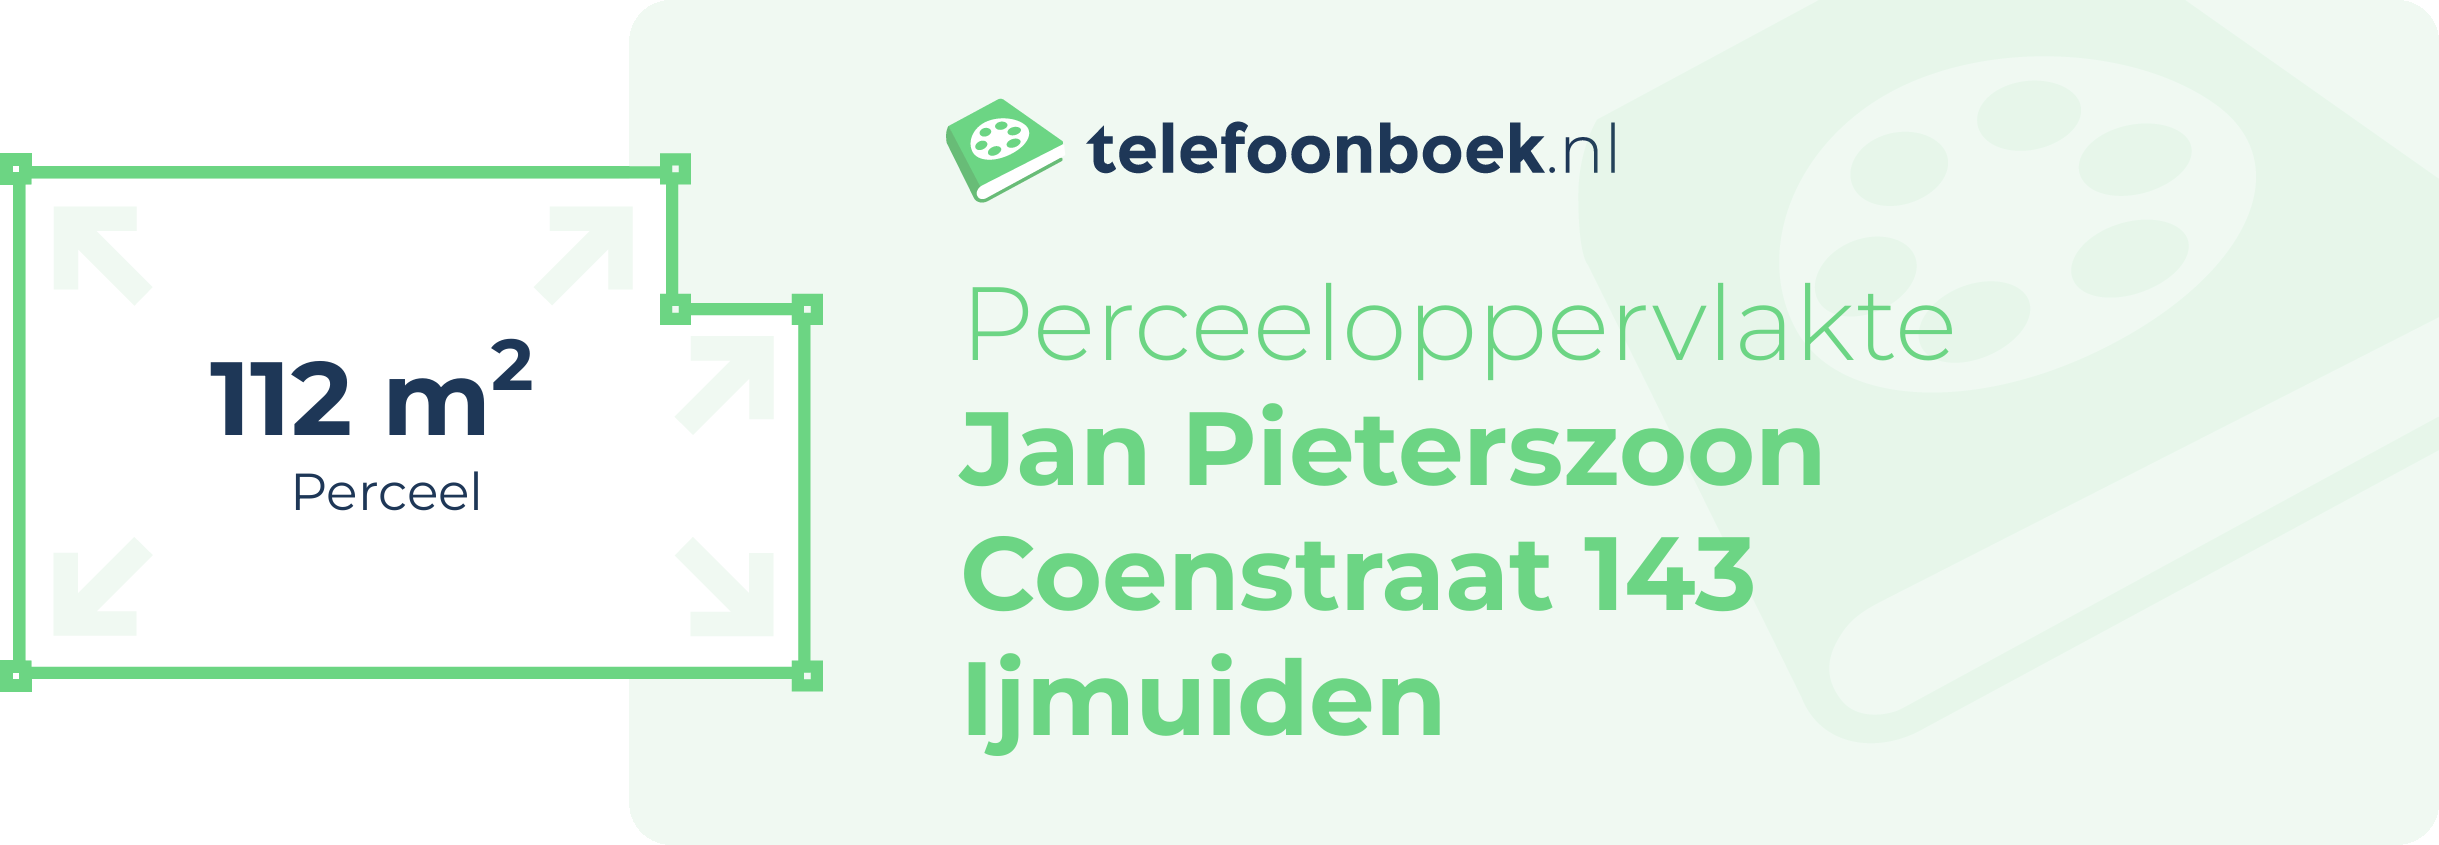 Perceeloppervlakte Jan Pieterszoon Coenstraat 143 Ijmuiden